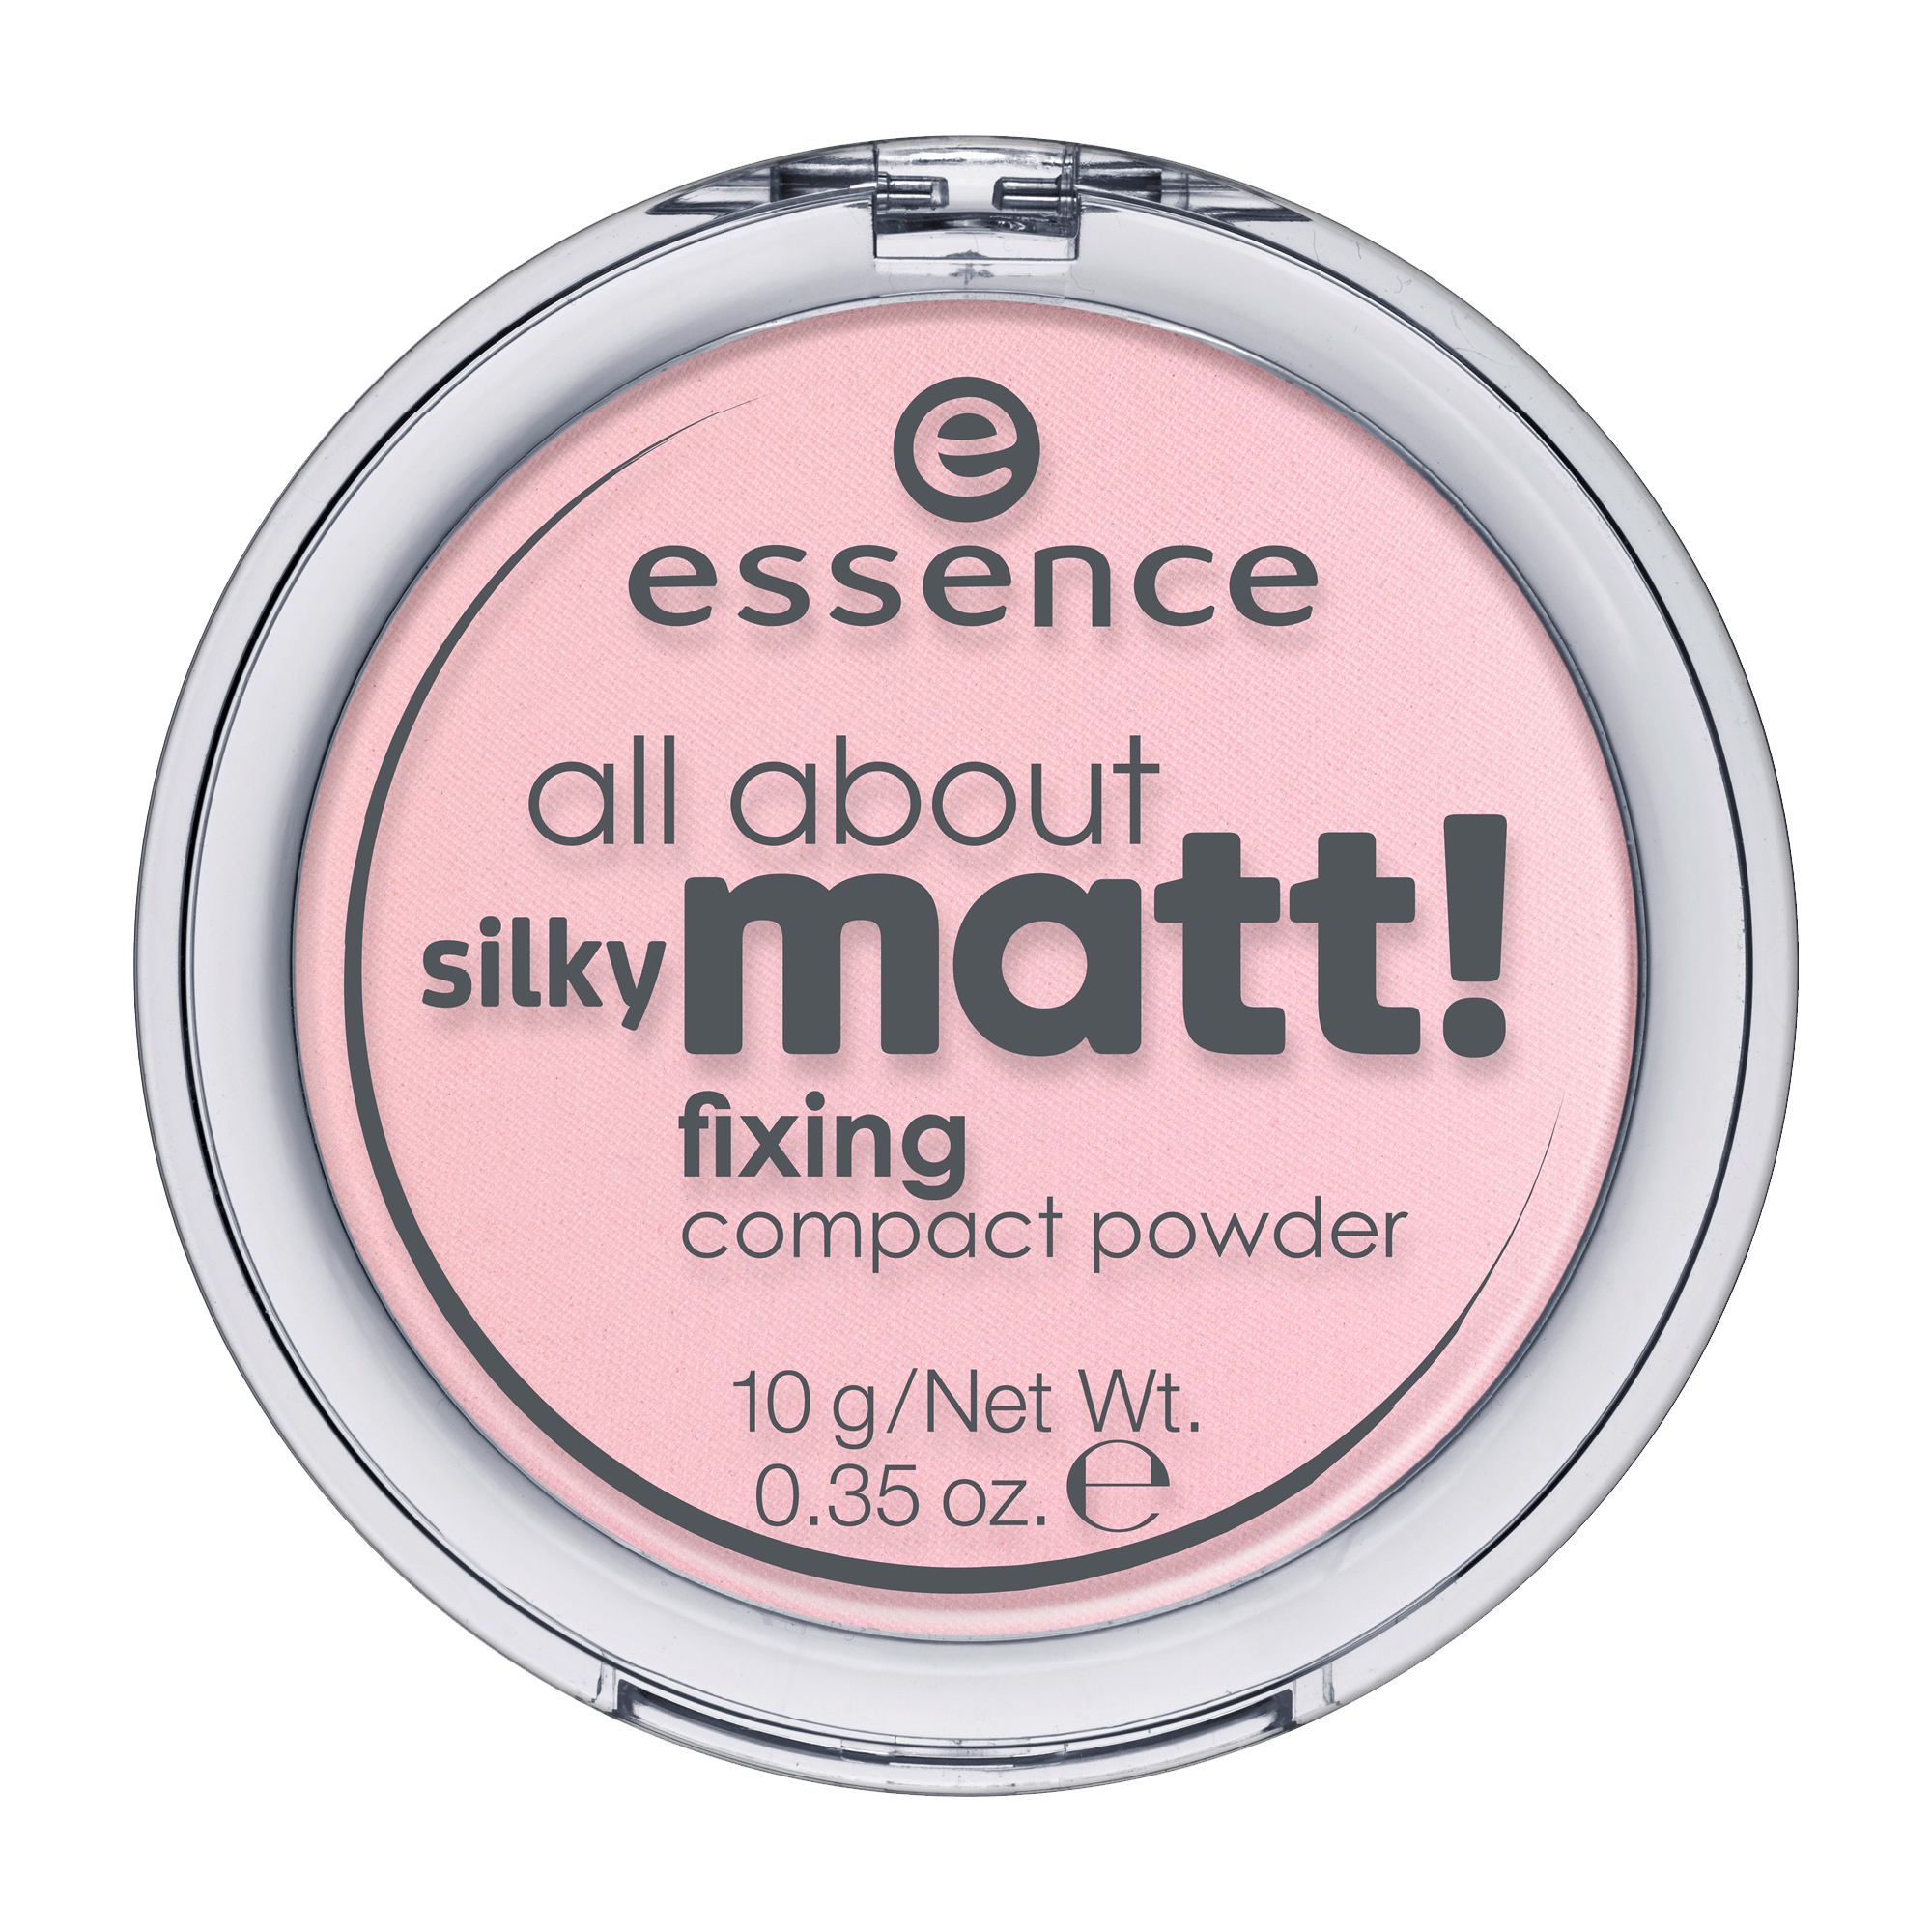 all about silky matt! fixing compact powder